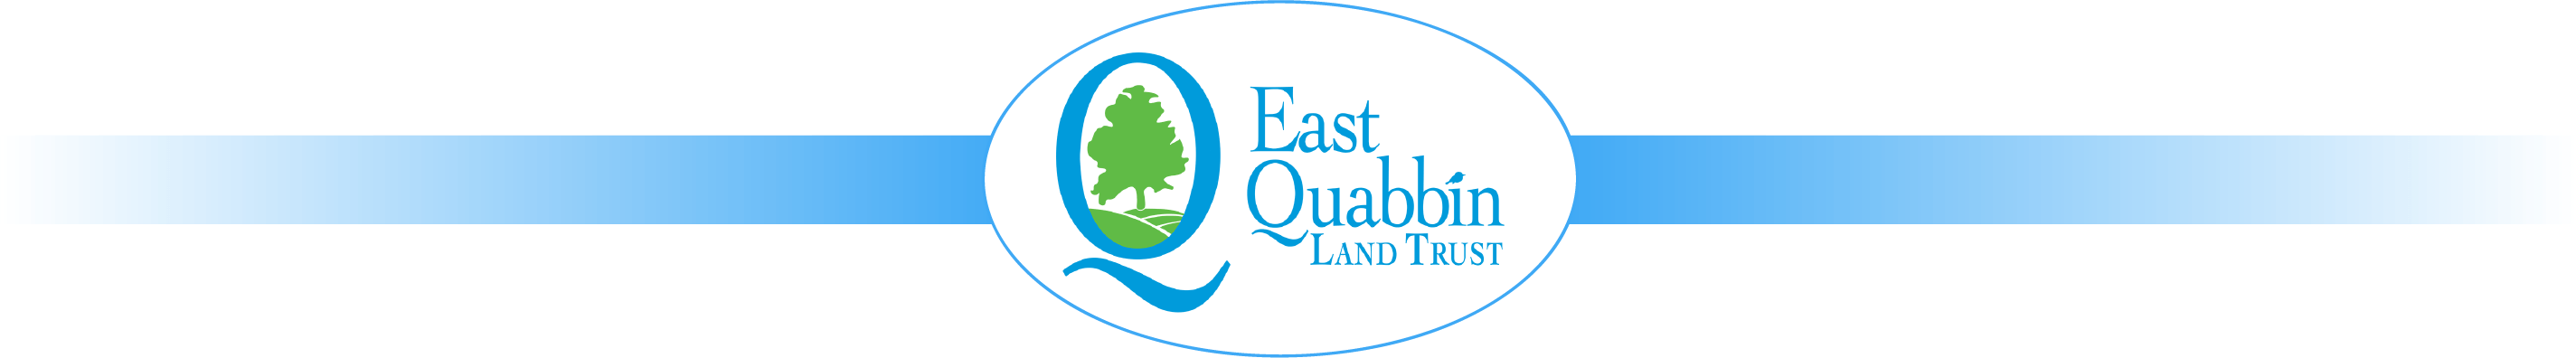 east quabbin land trust